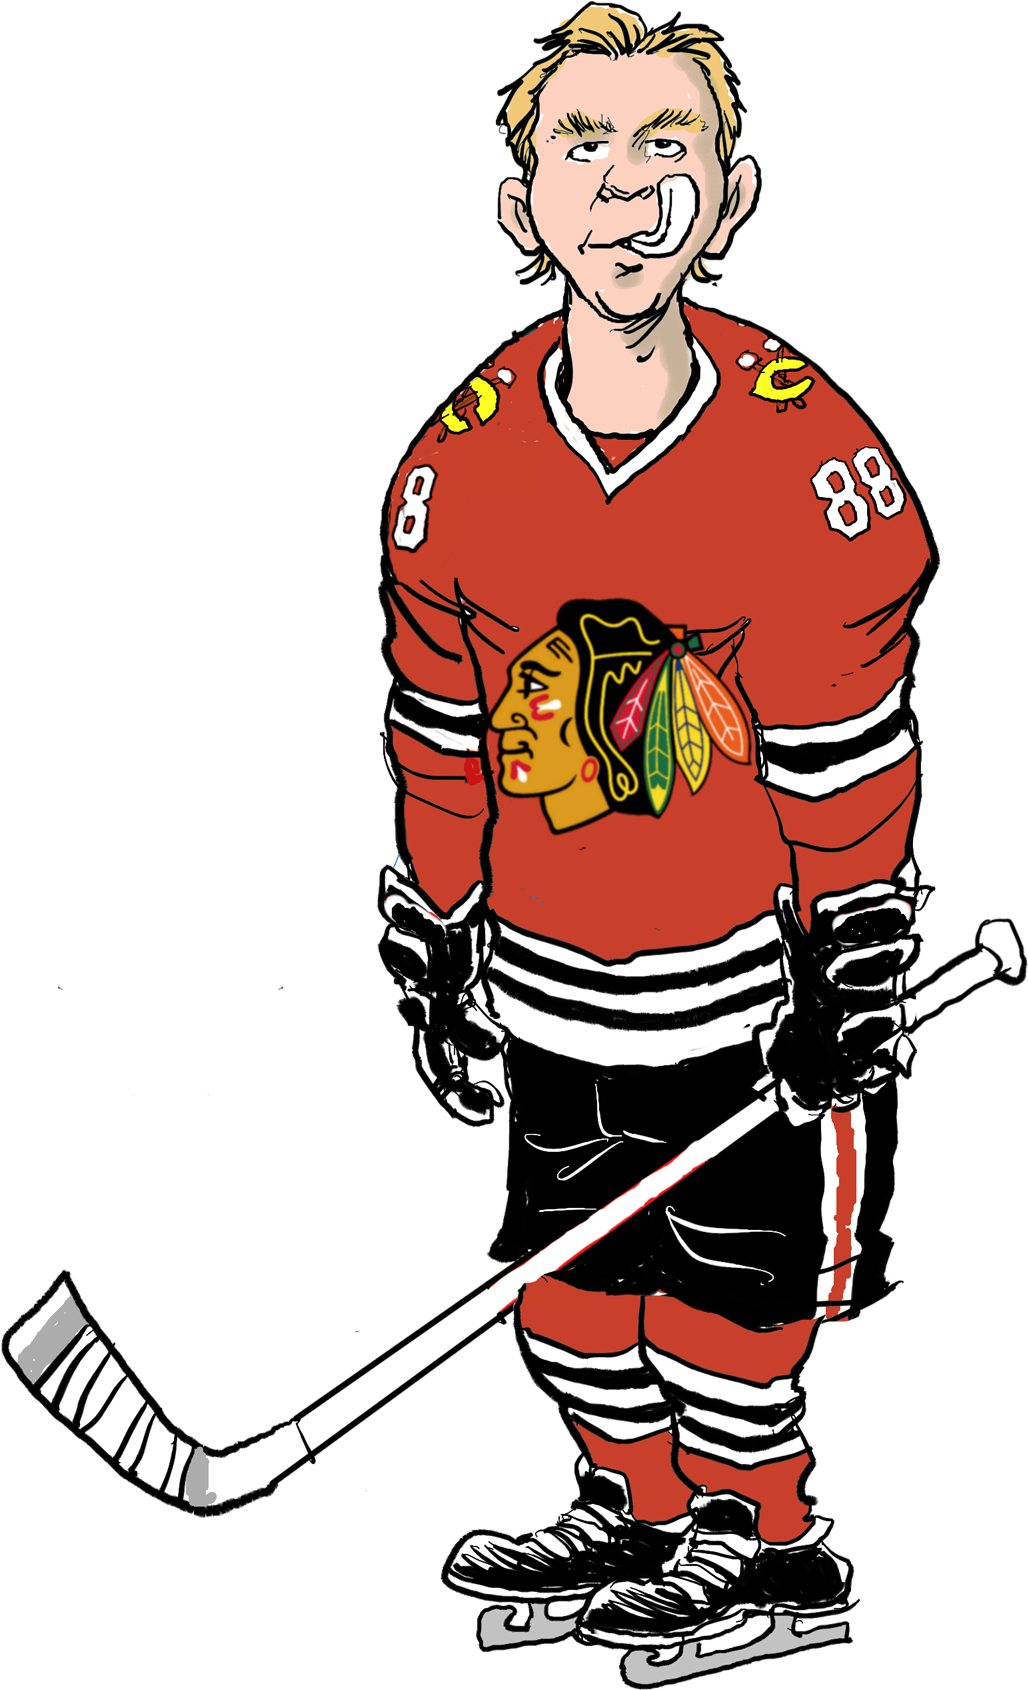 Patrick Kane - Chicago Blackhawks Jersey (1044x1689)